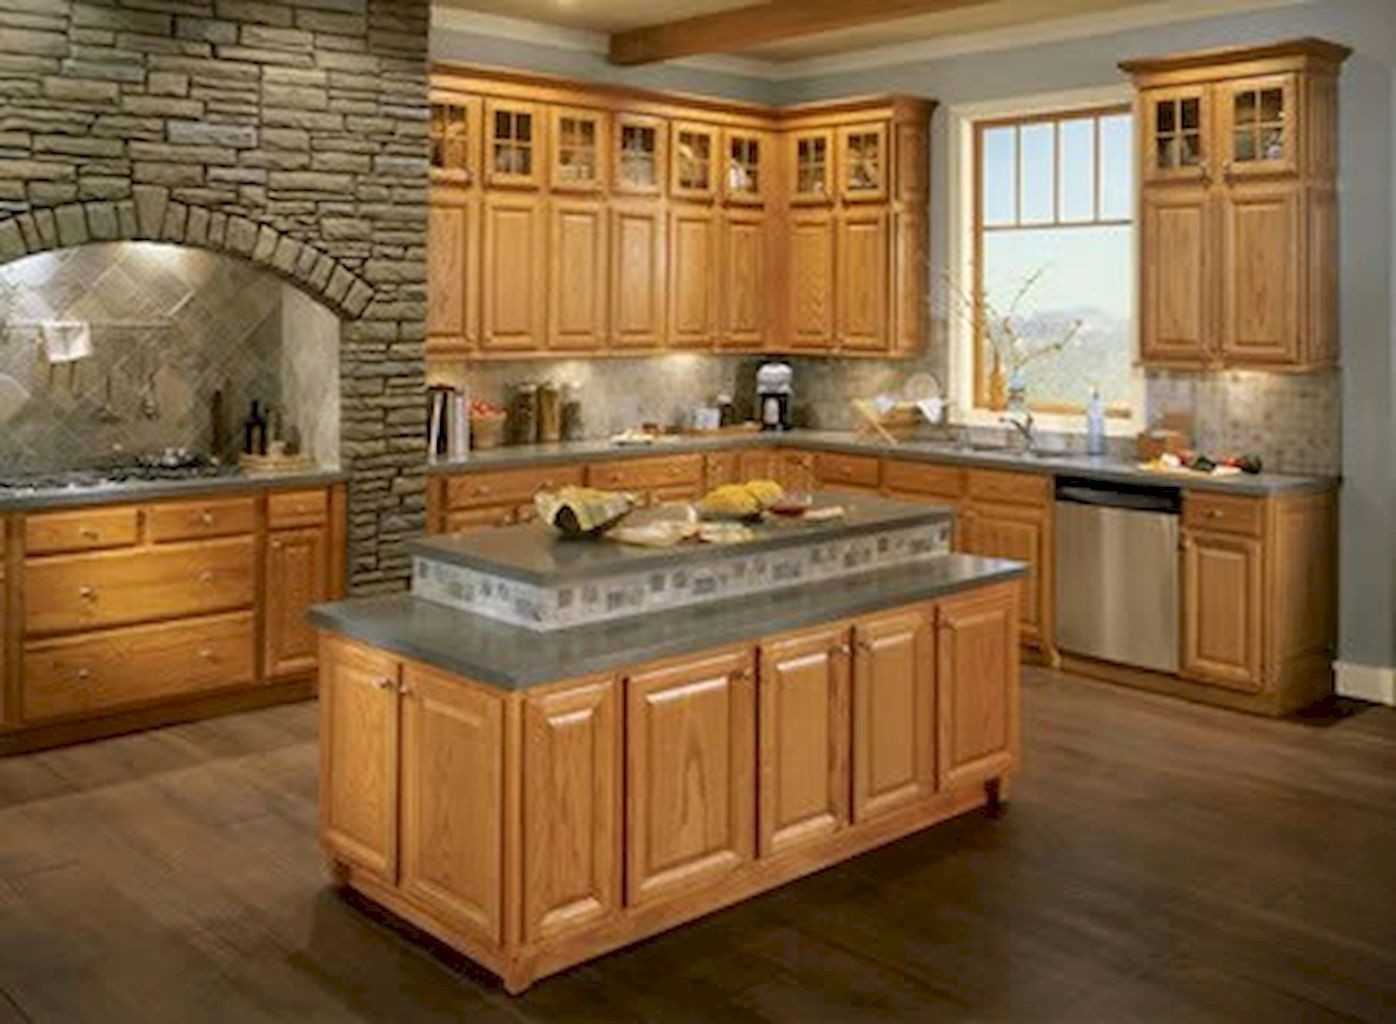 Kitchen backsplash with oak cabinets